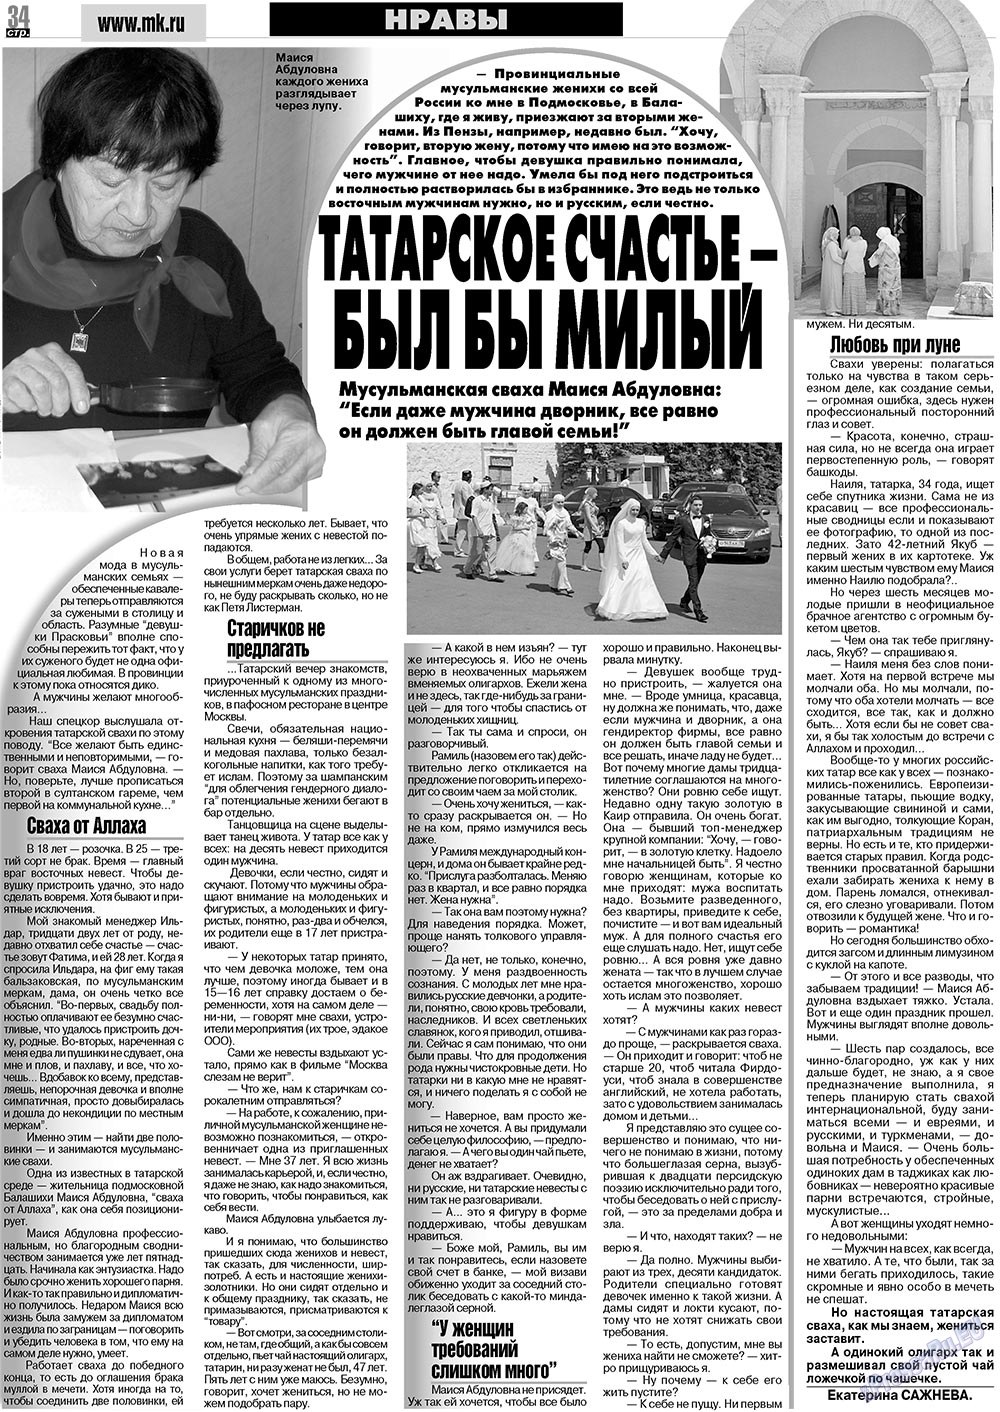 МК-Германия, газета. 2010 №25 стр.34